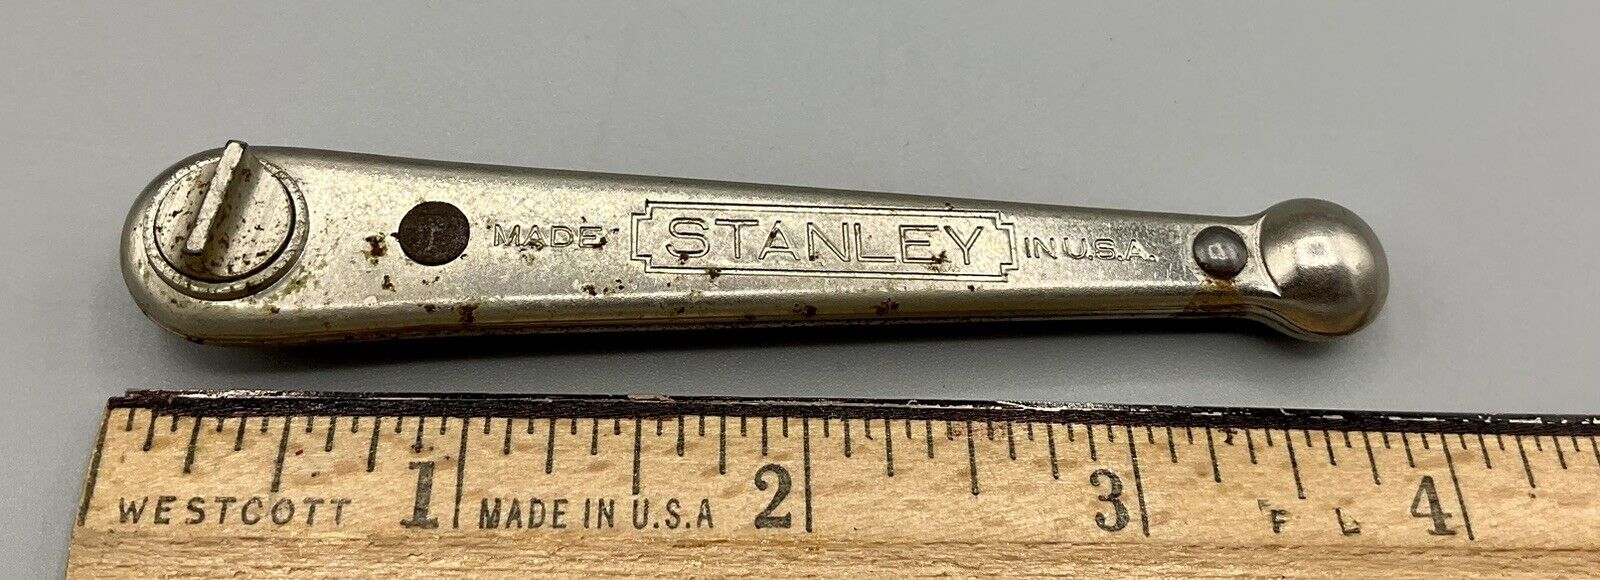 STANLEY YANKEE No. 3400 - OFFSET RATCHET SCREWDRIVER  - U.S.A.